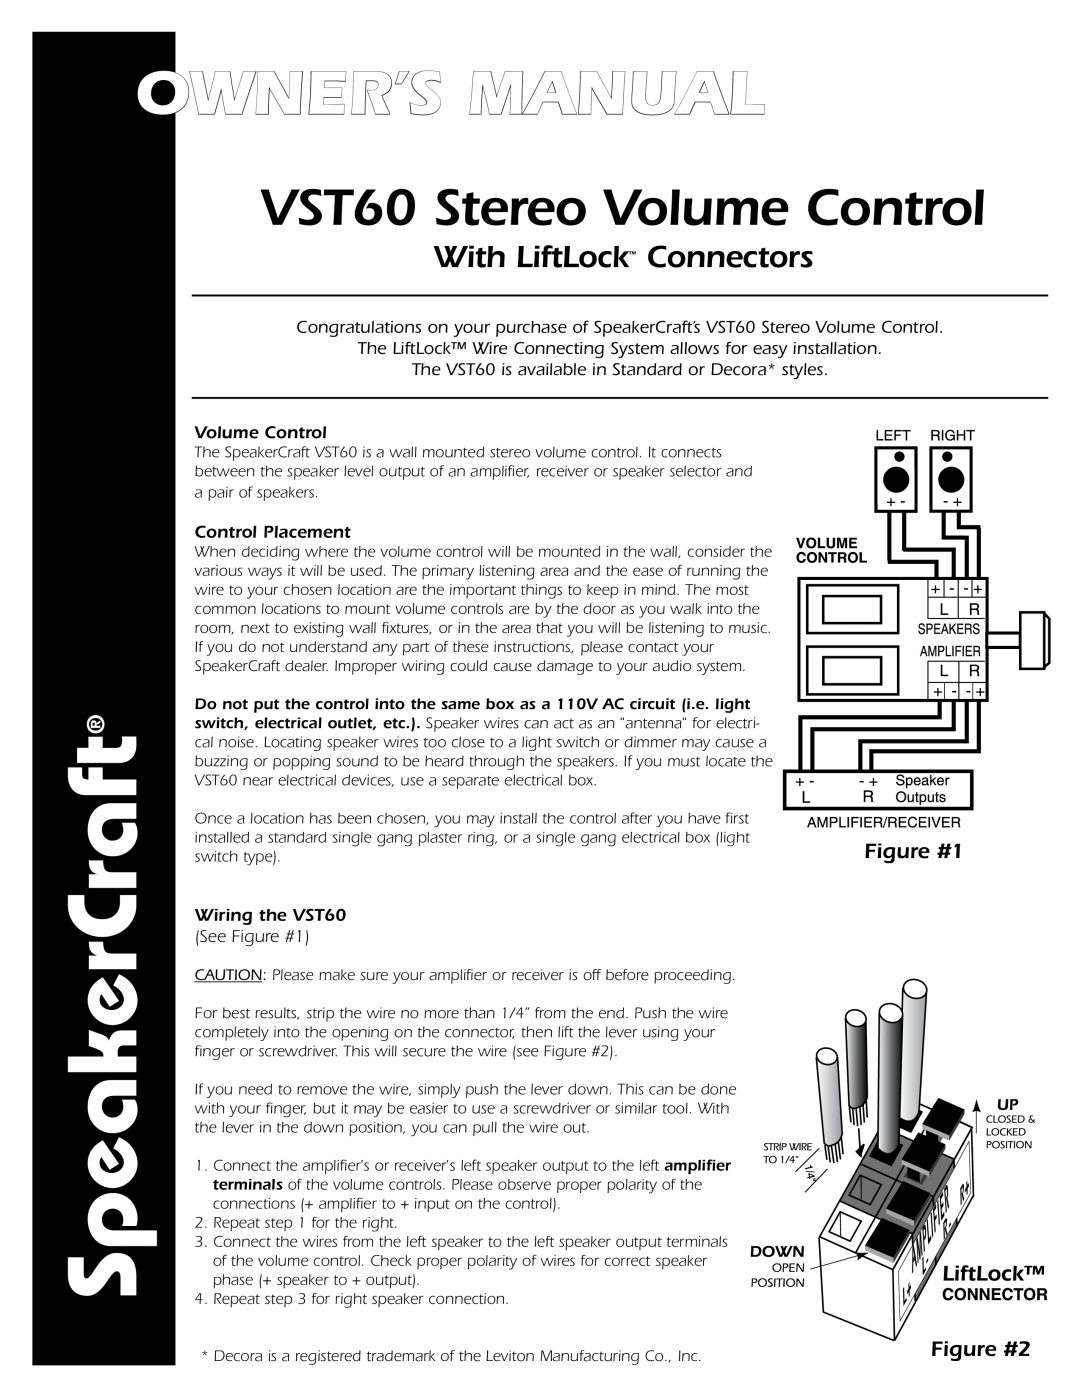 SpeakerCraft owner manual Figure #1, Figure #2, SpeakerCraft, VST60 Stereo Volume Control, With LiftLock Connectors 